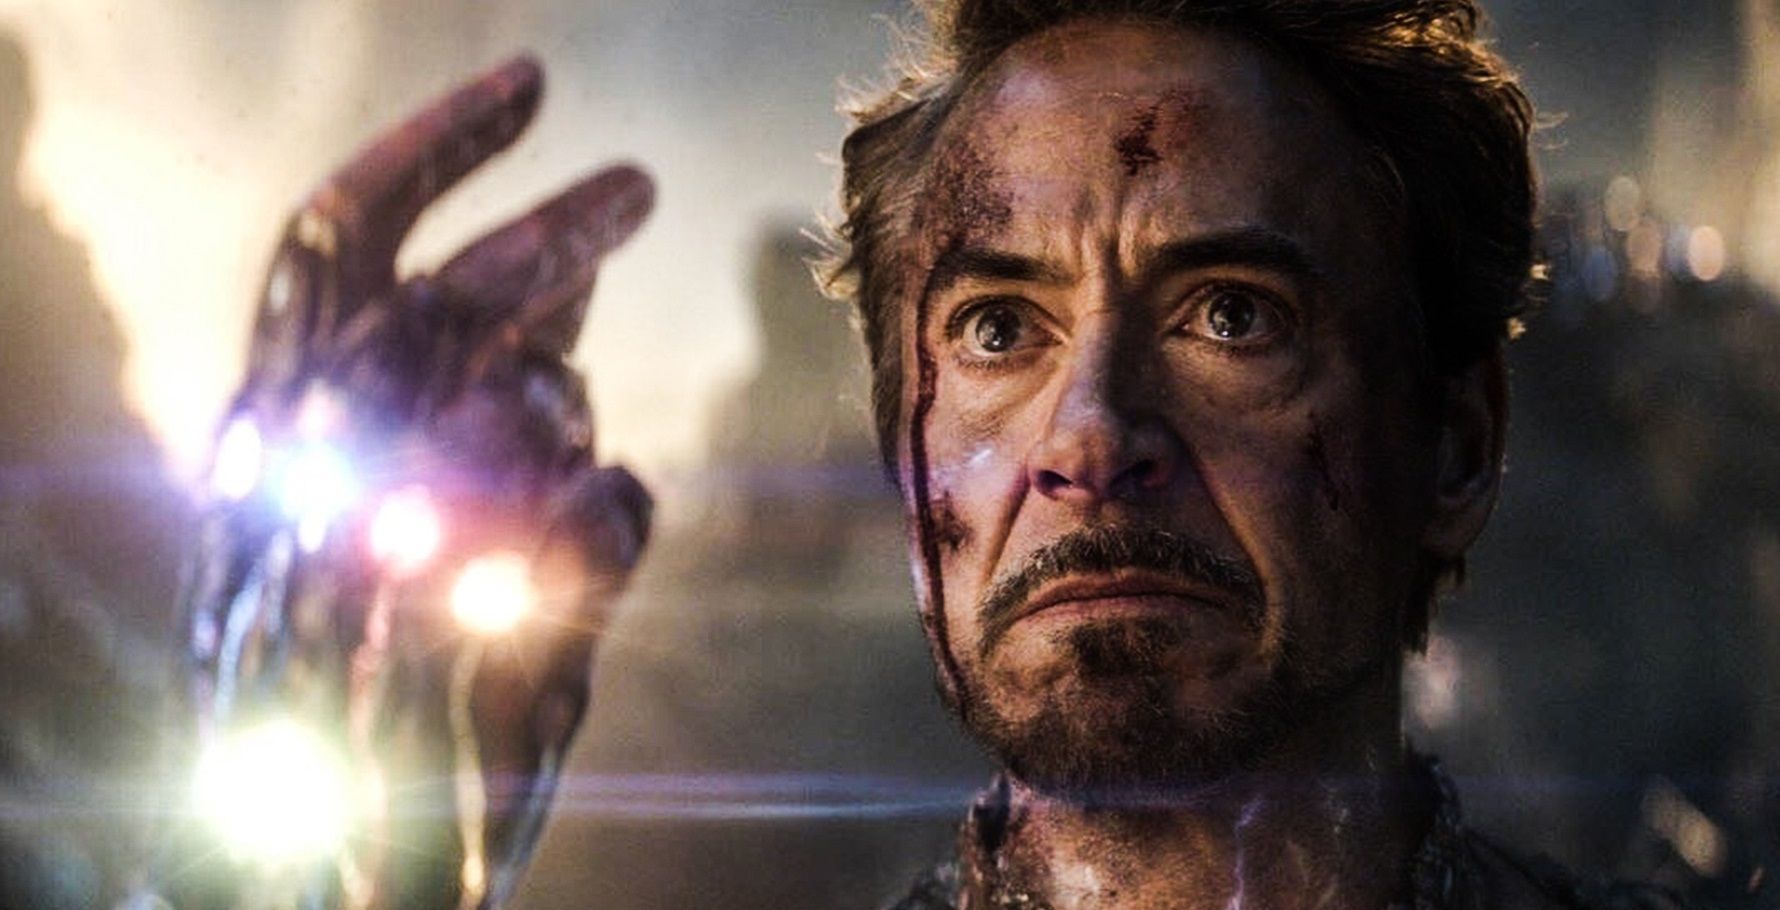 Image of Iron Man from Avengers Endgame